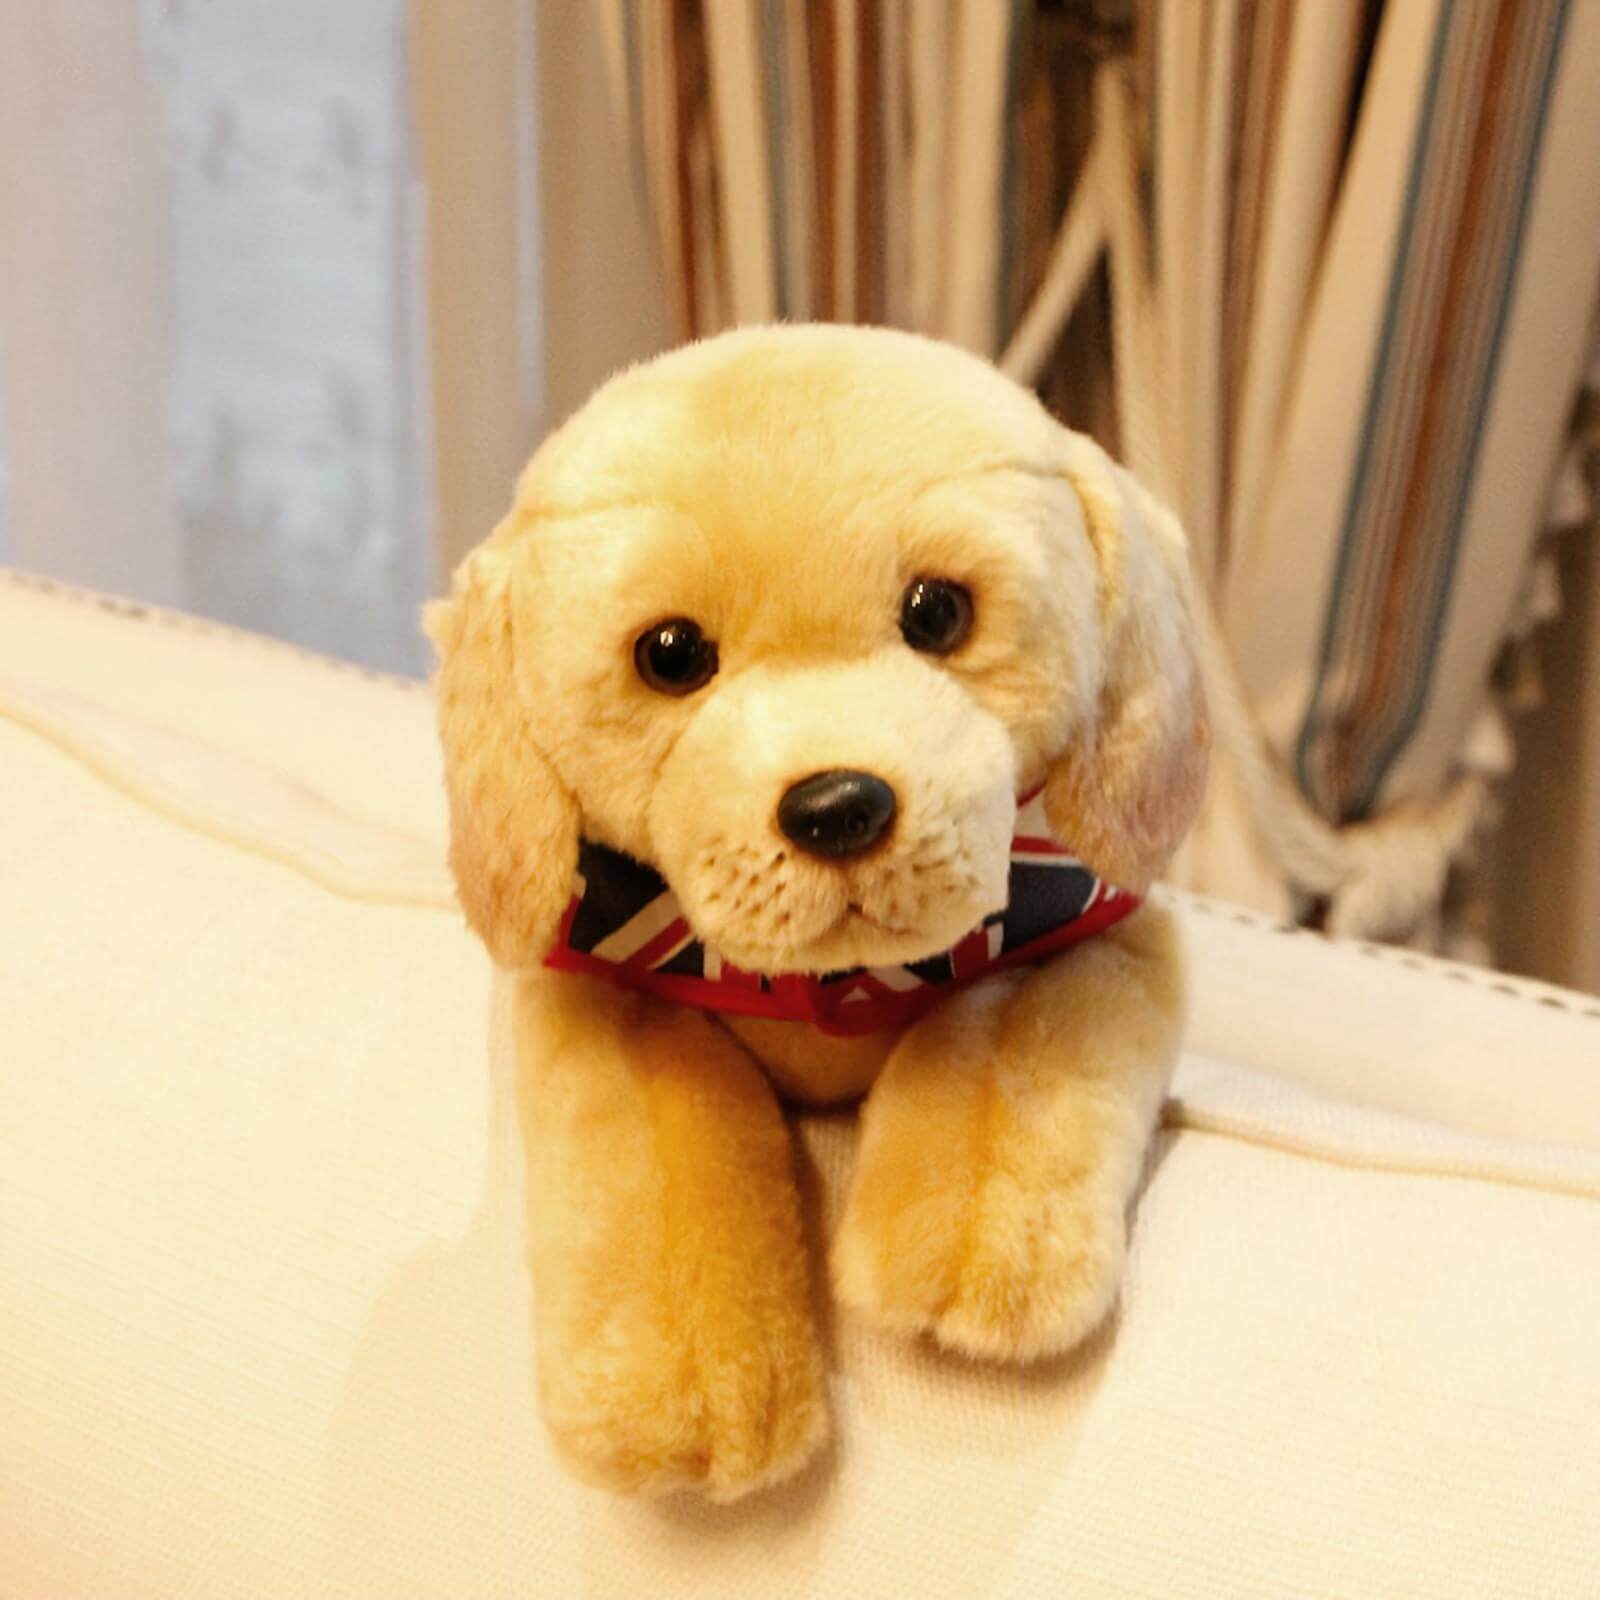 Realistic Labrador Retriever Dog Stuffed Animal Plush Toy